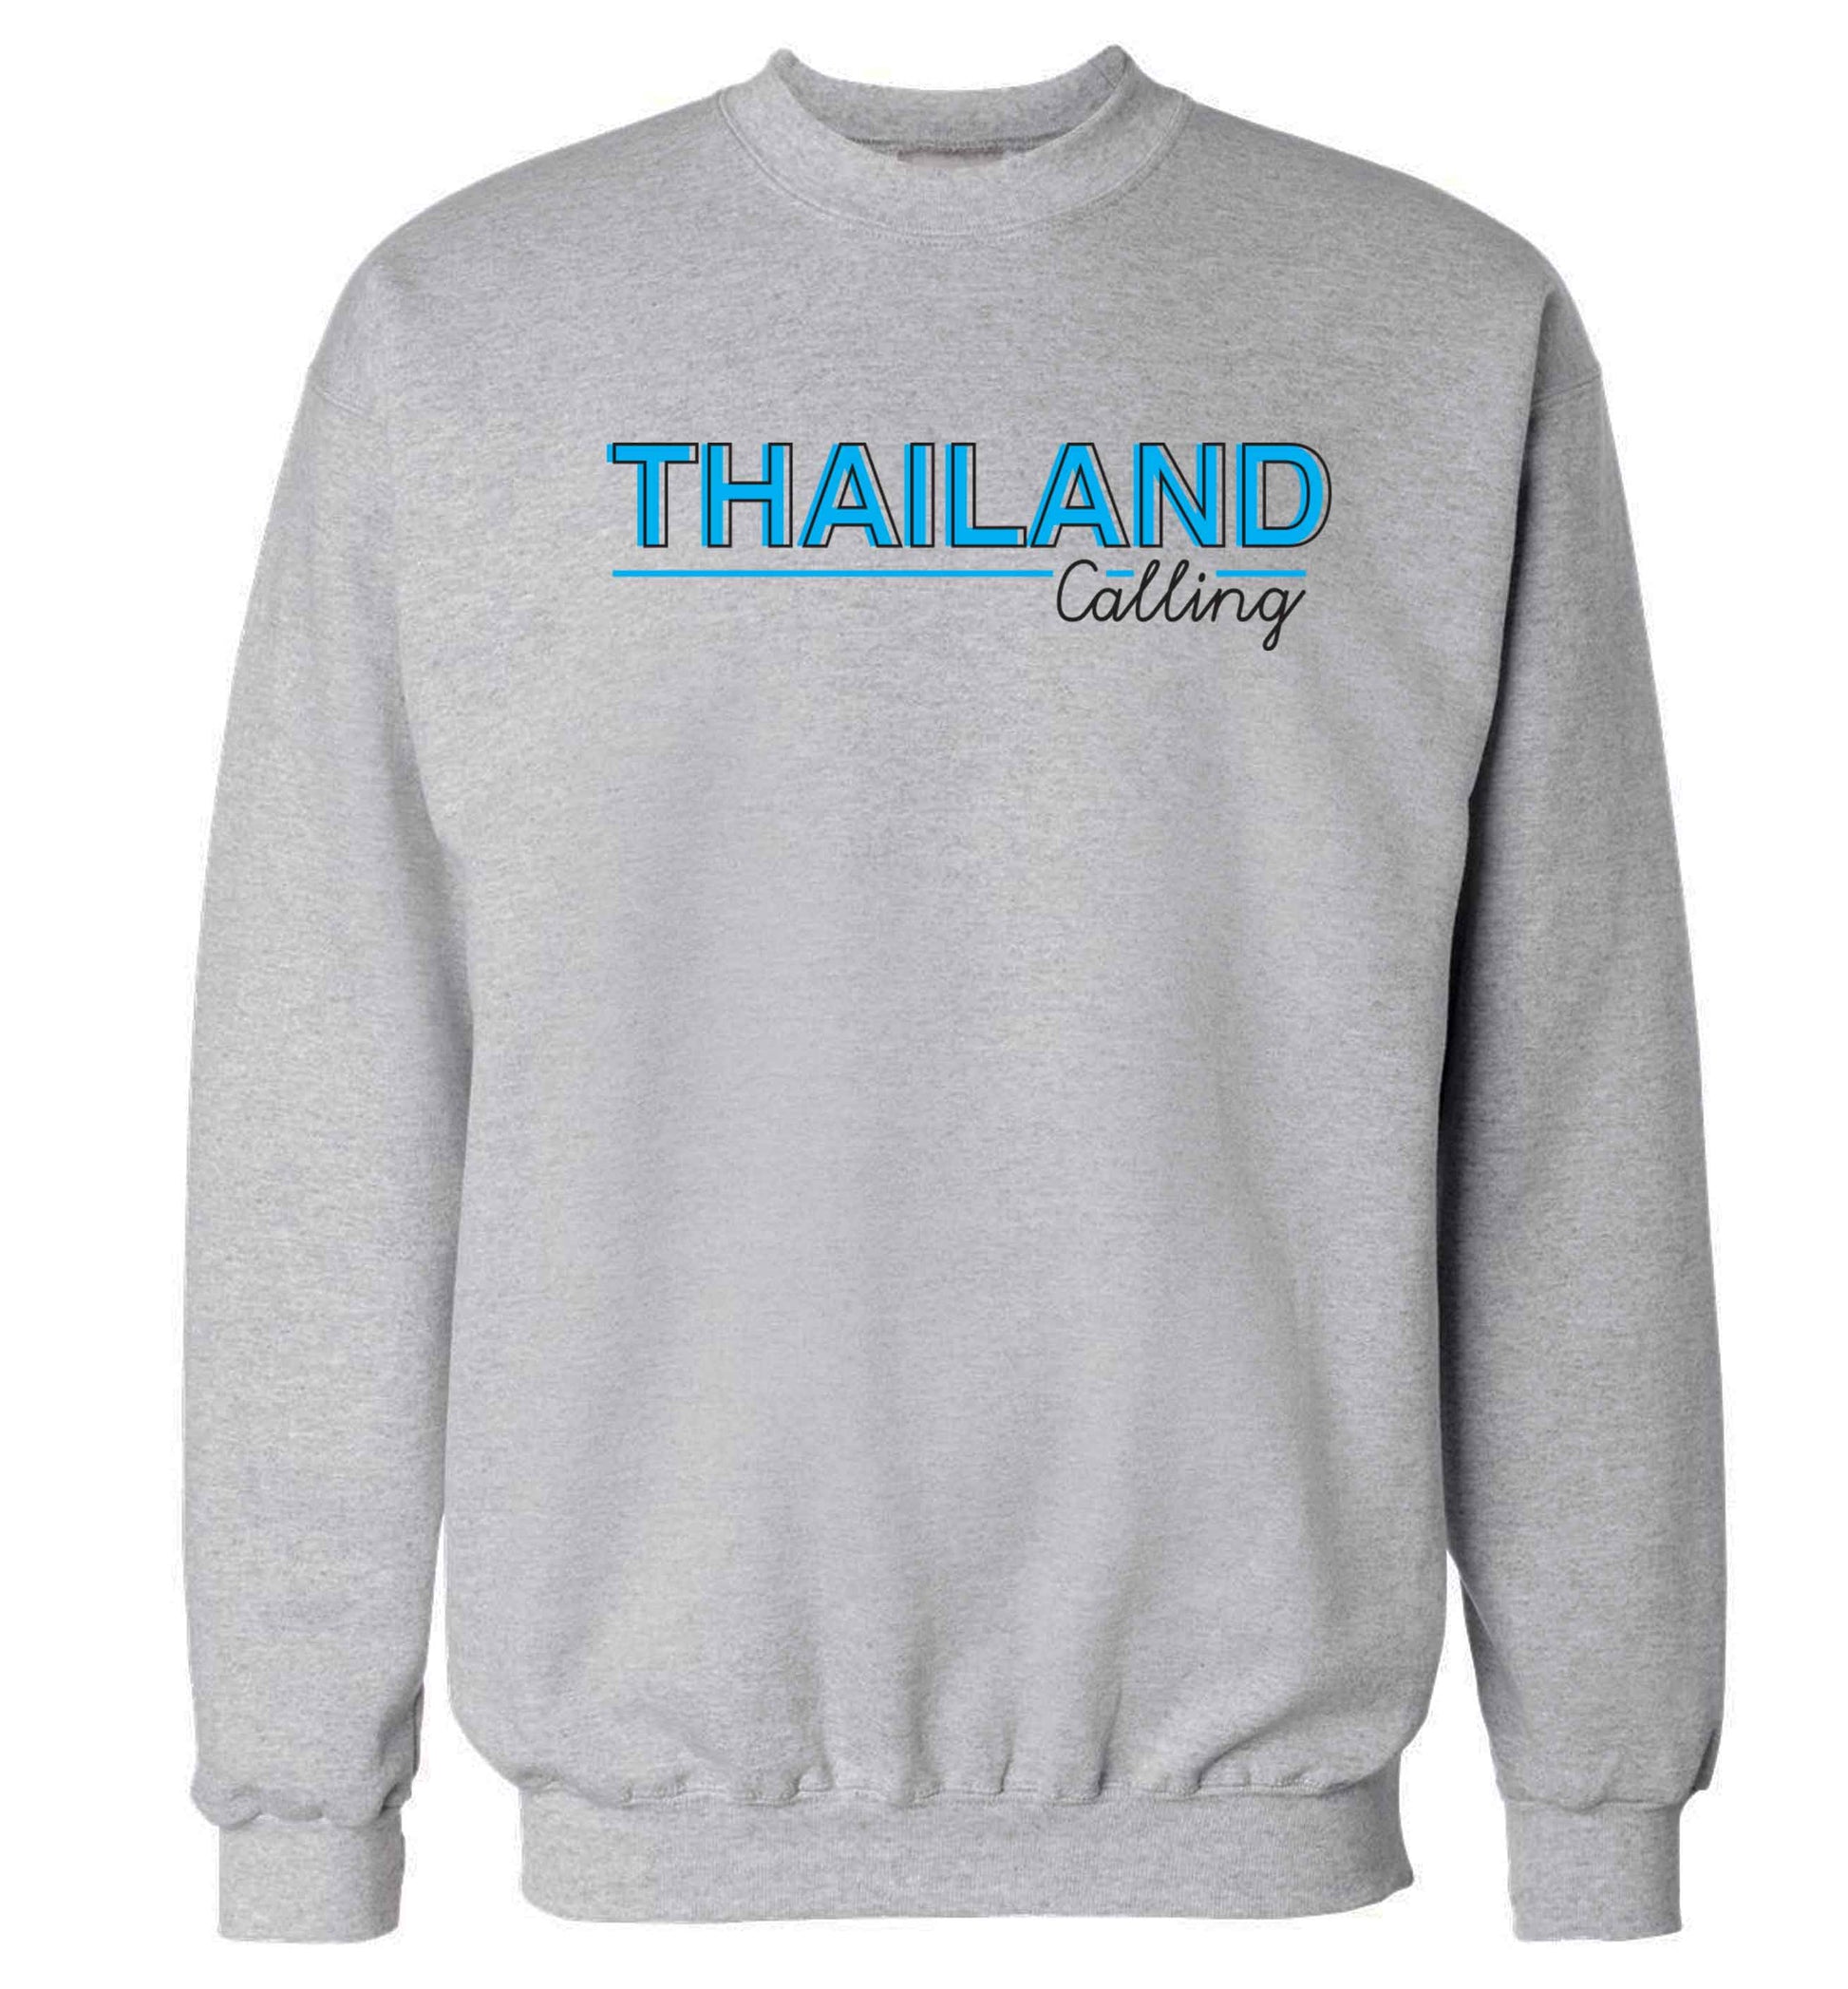 Thailand calling Adult's unisex grey Sweater 2XL